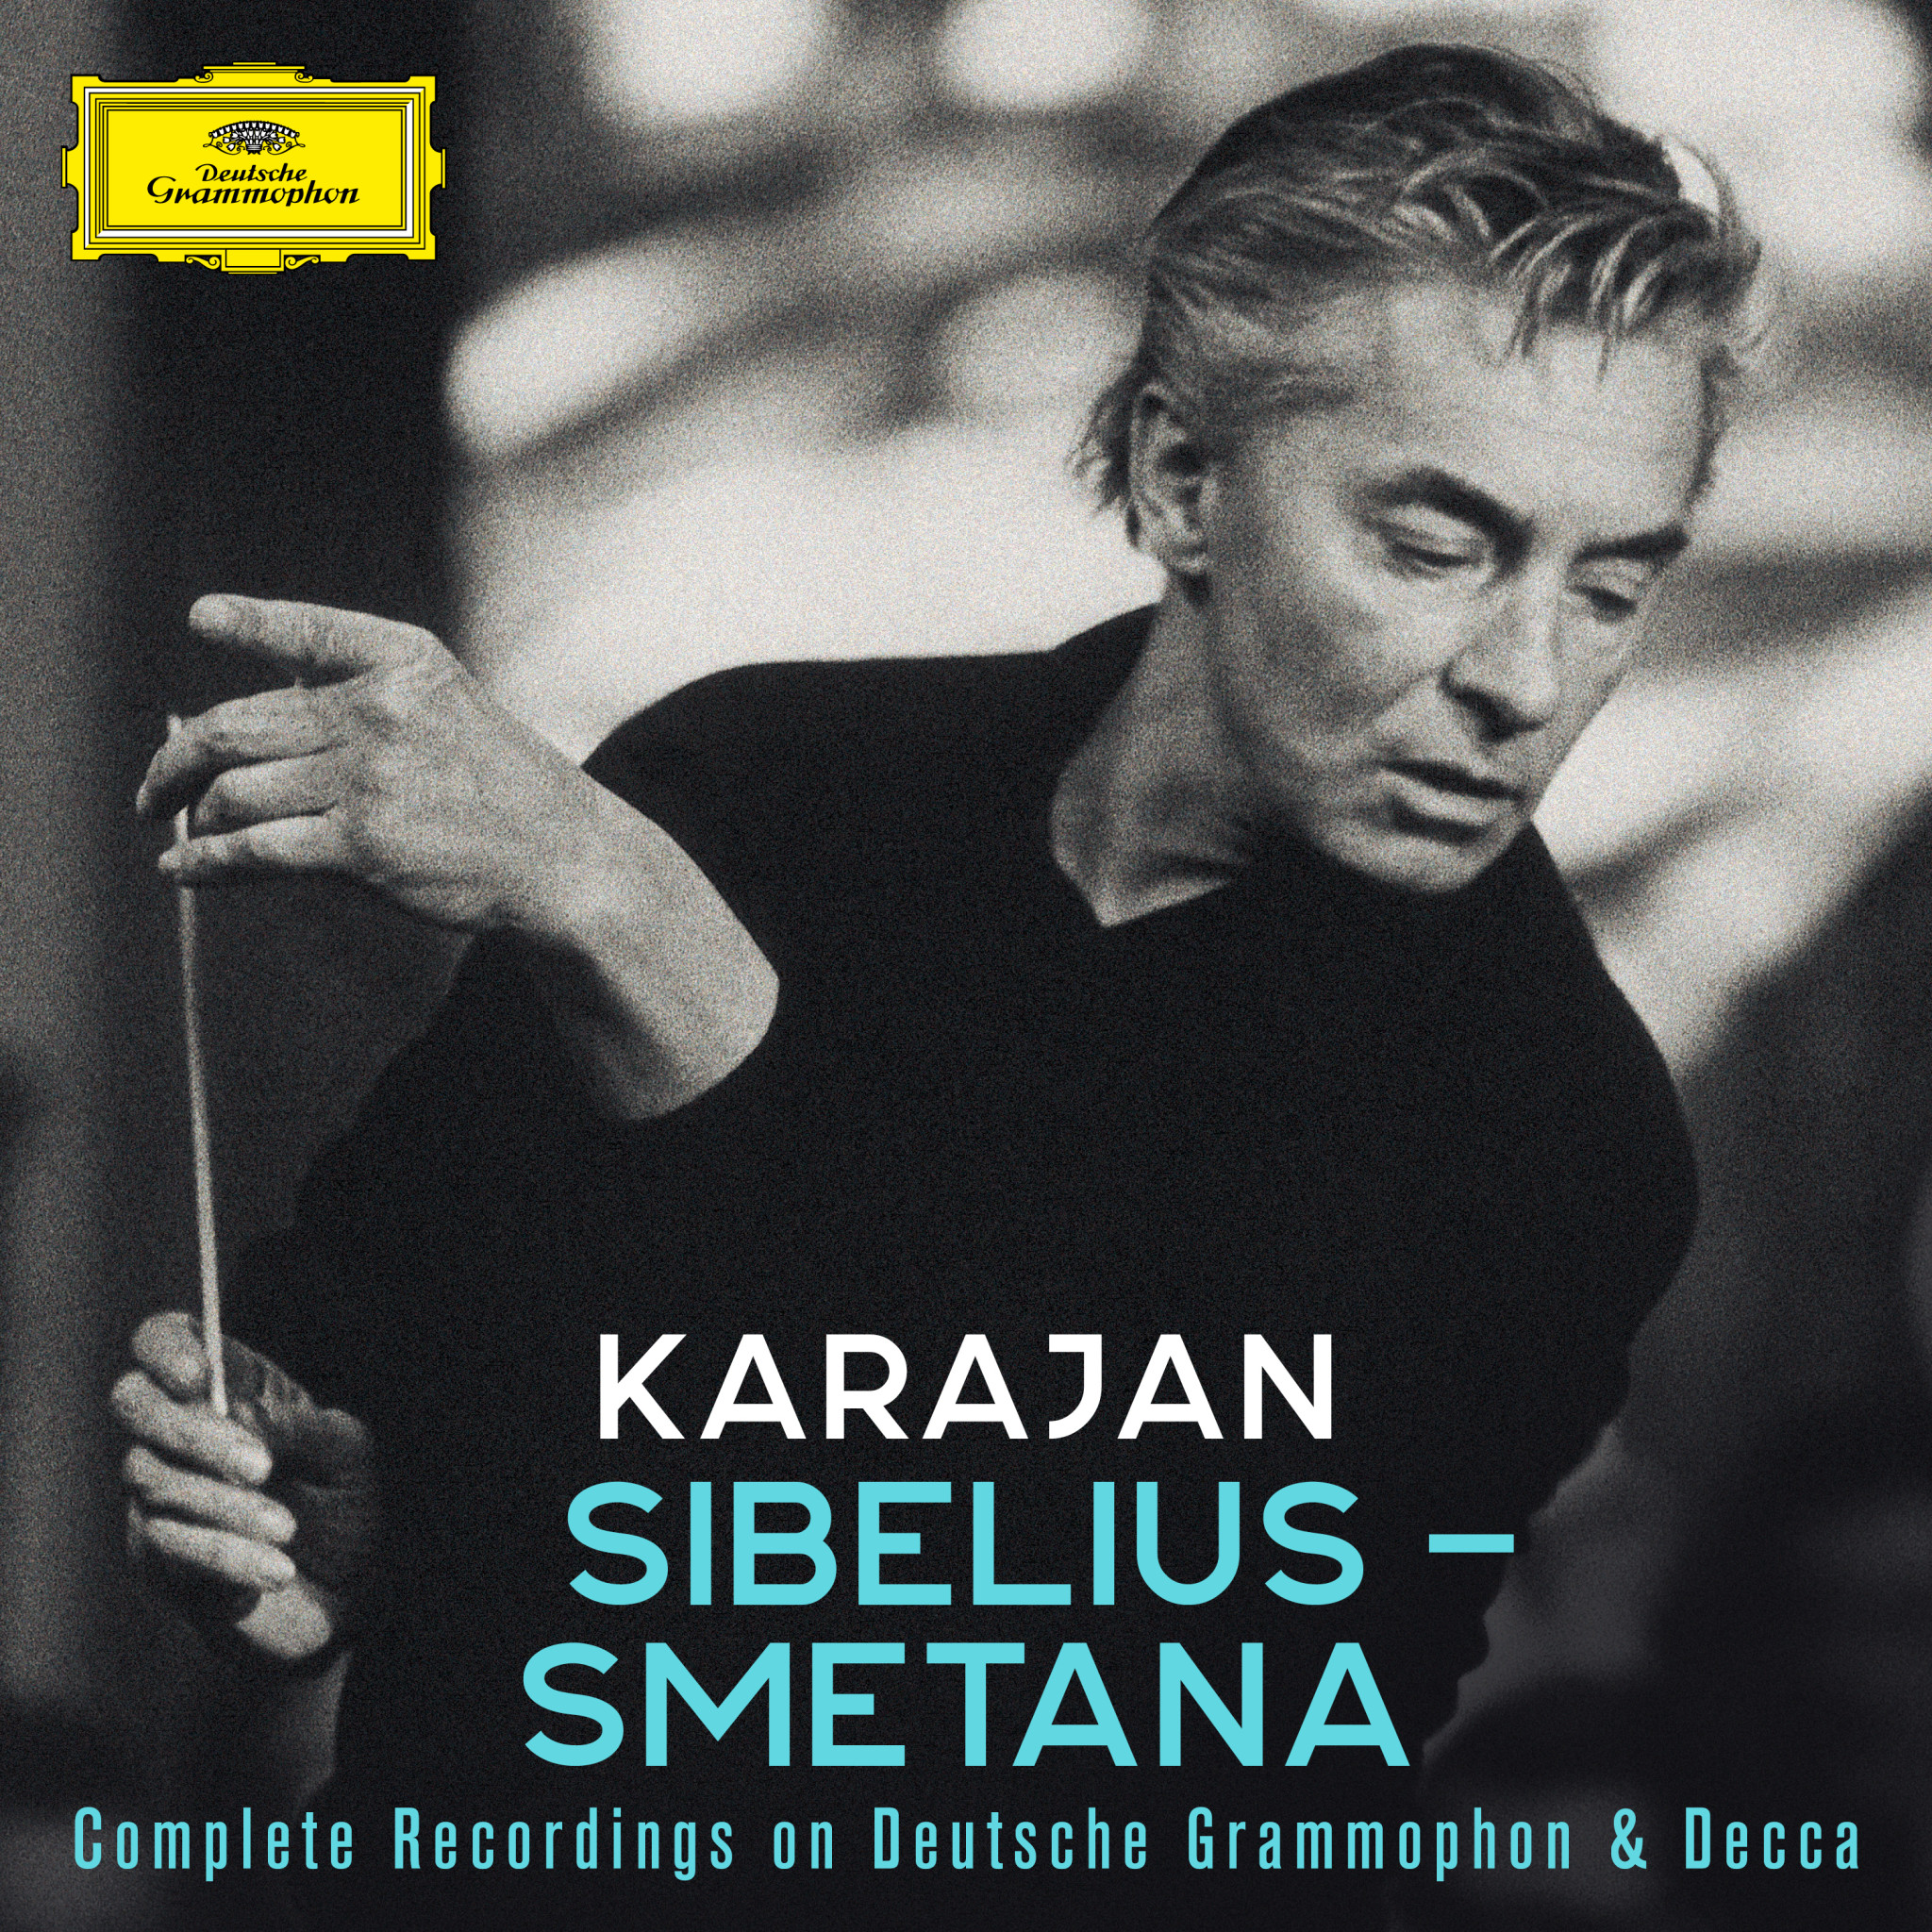 SIBELIUS - SMETANA Karajan